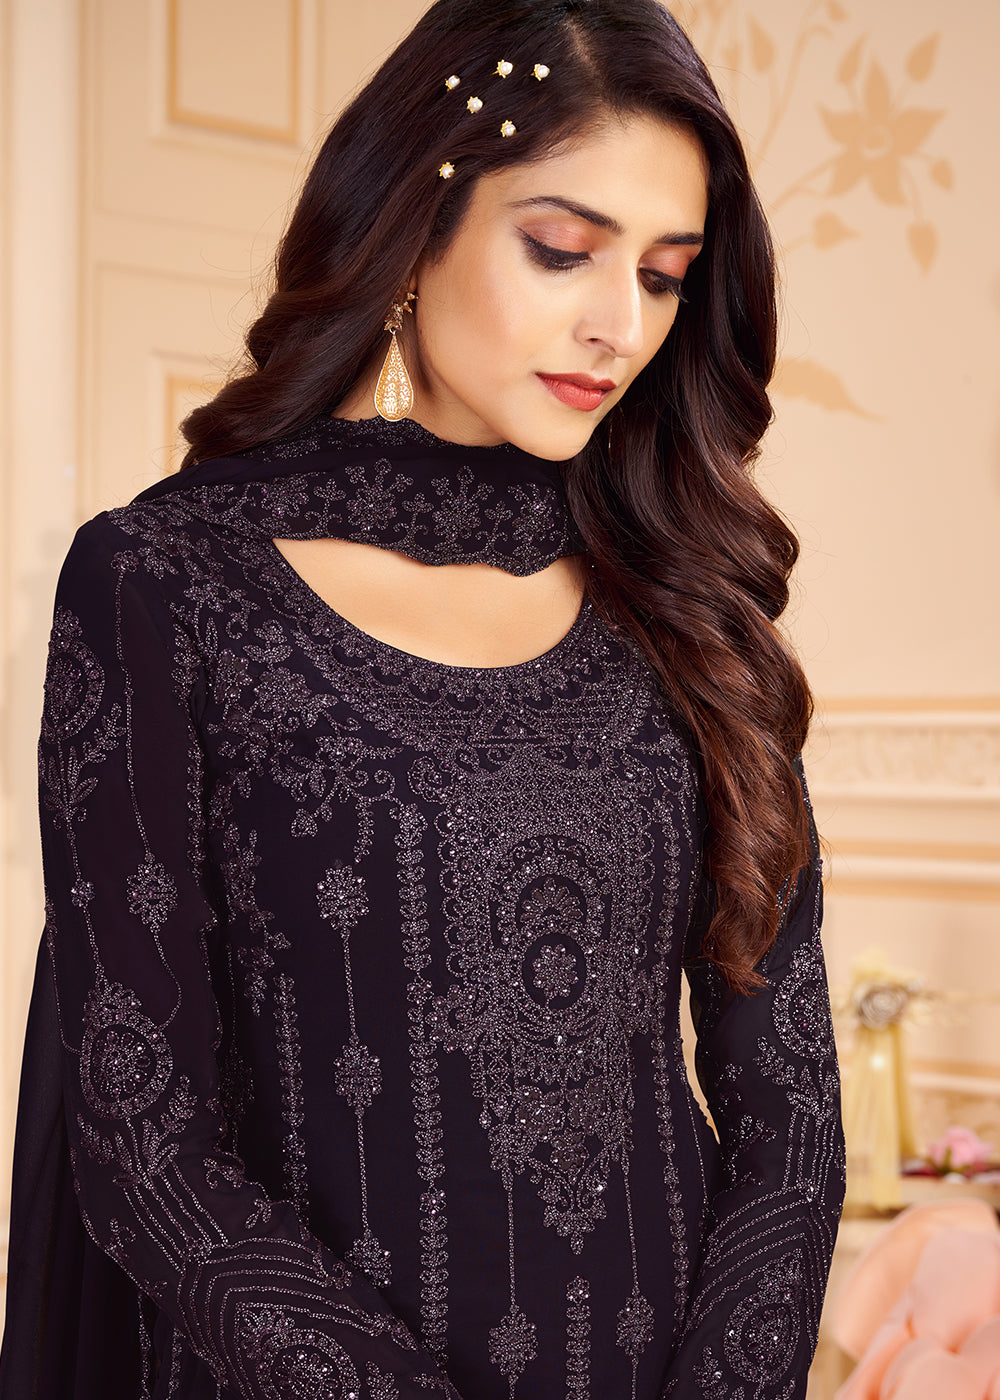 Buy Now Trendy Dark Purple Georgette Eid Wear Salwar Kurta Suit Online in USA, UK, Canada & Worldwide at Empress Clothing.